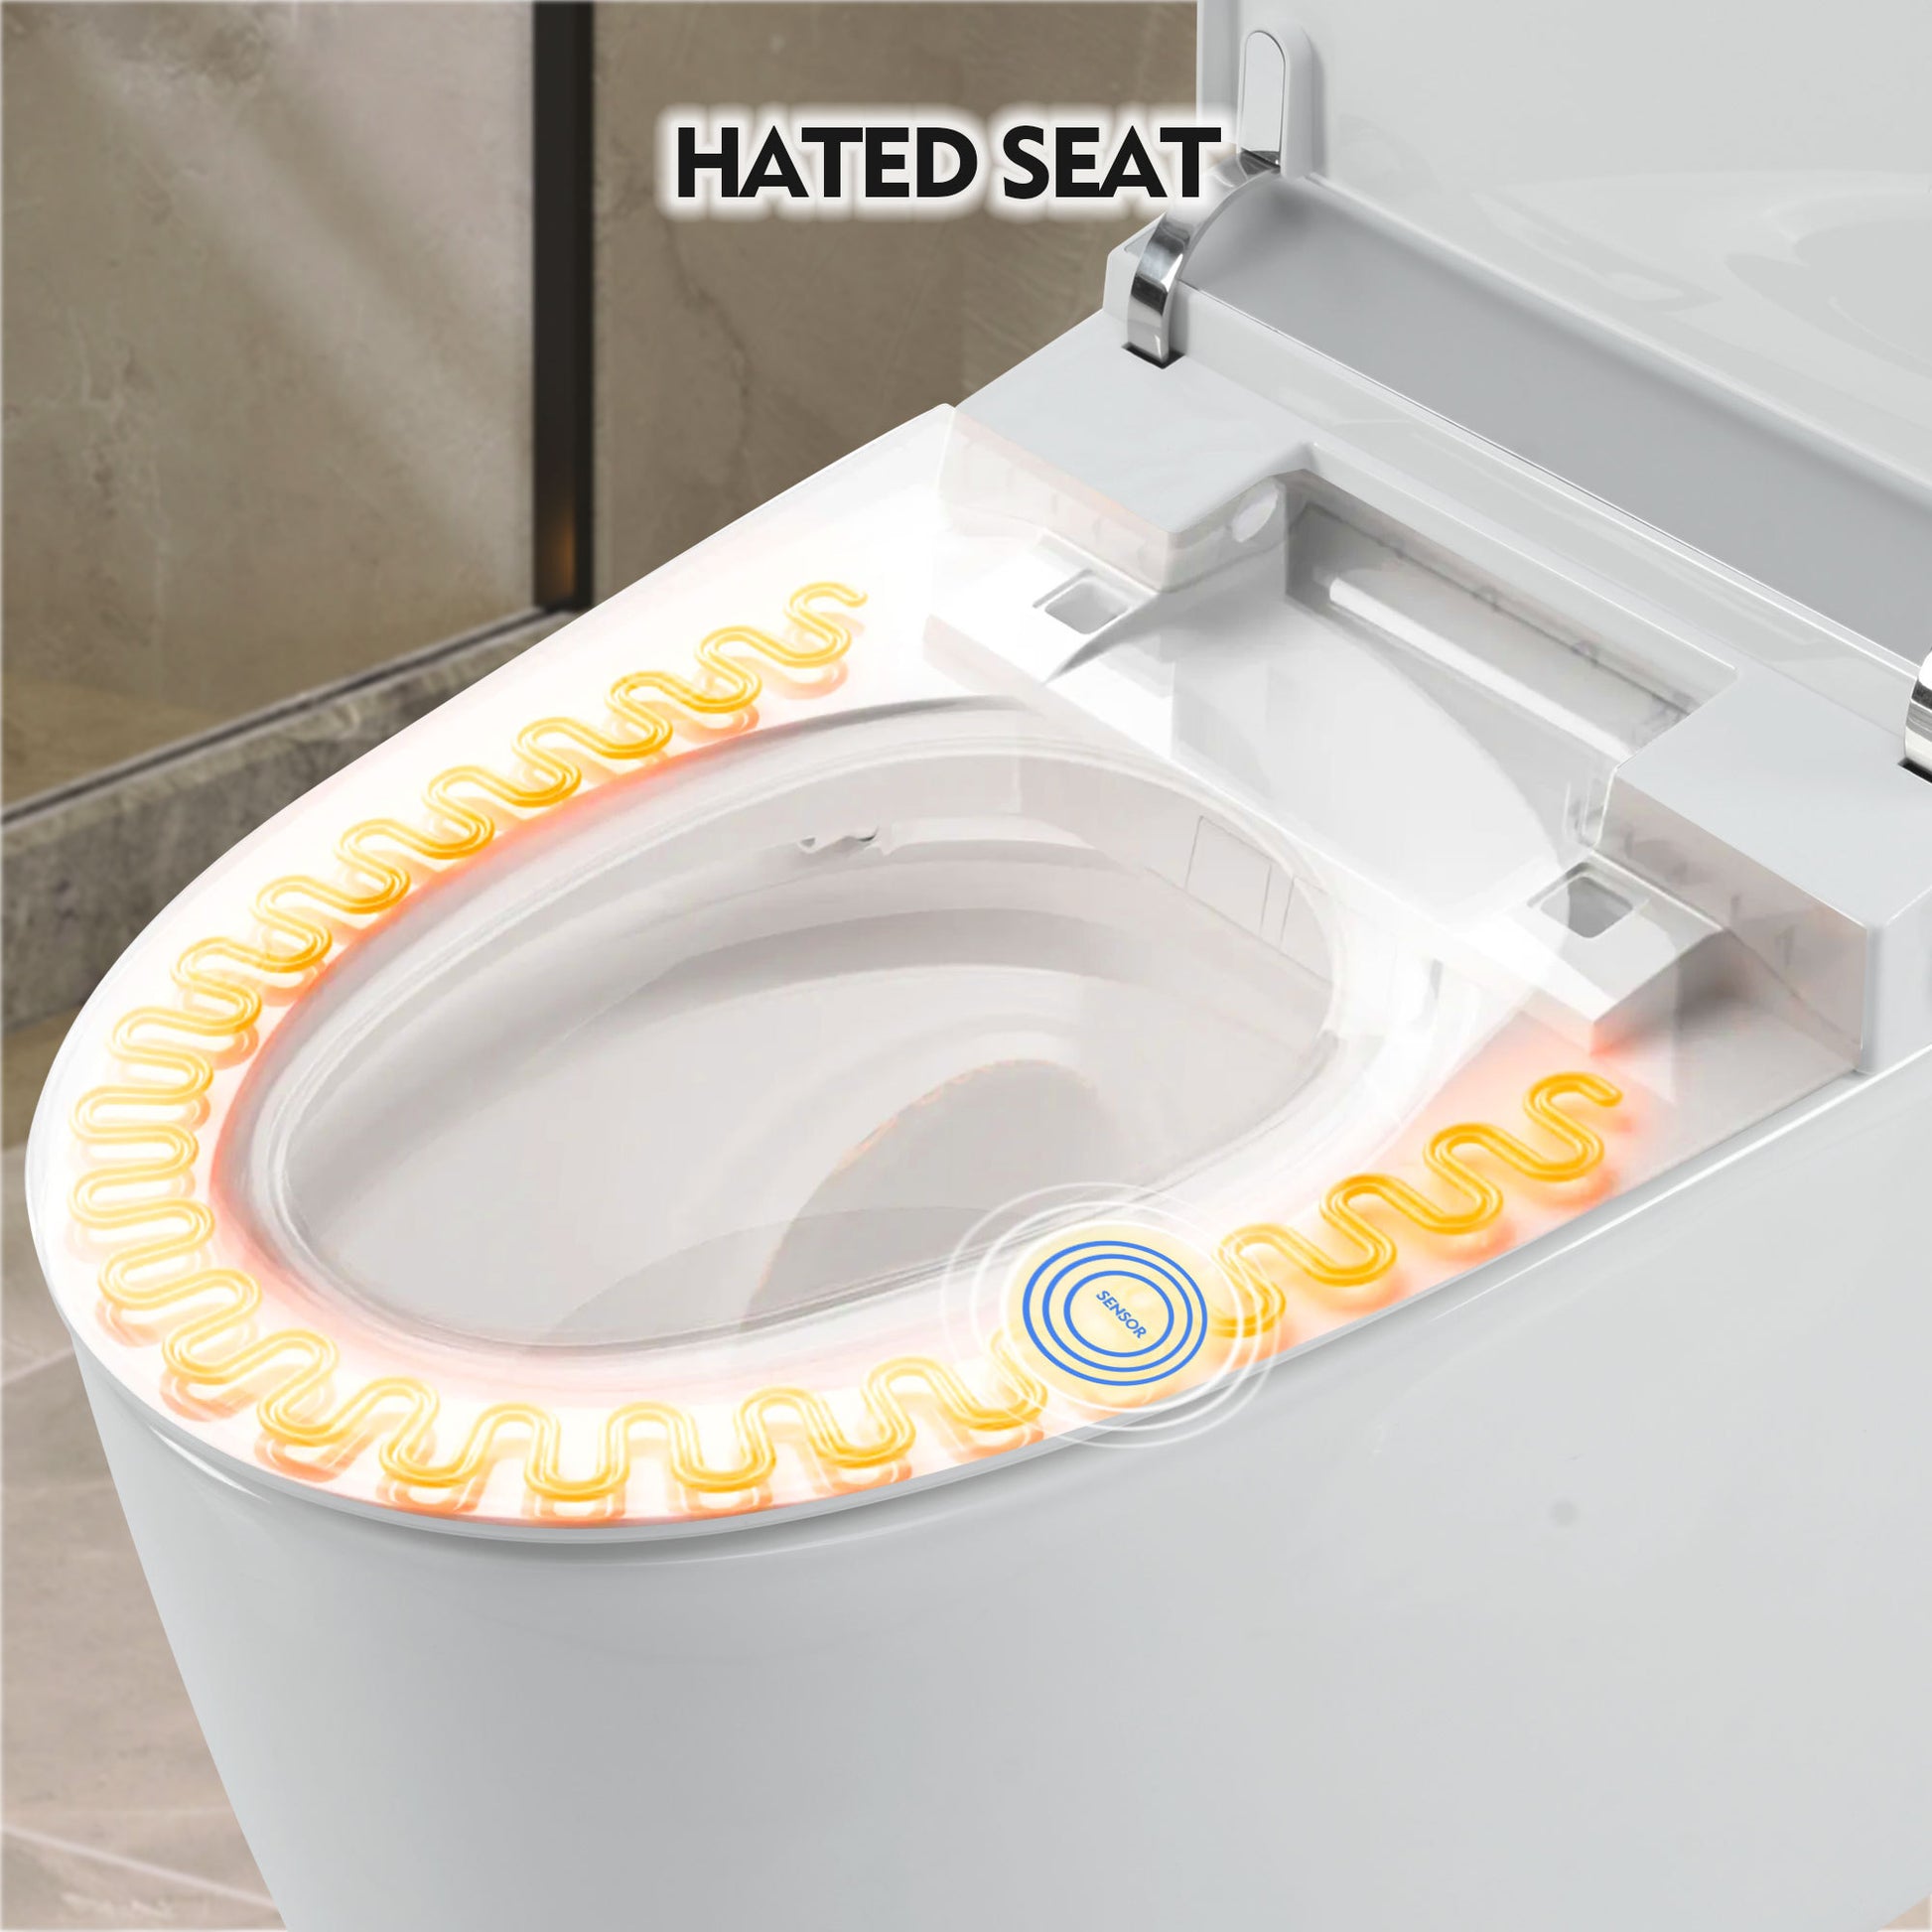 Heated Seat Smart Toilet, One Piece Toilet,